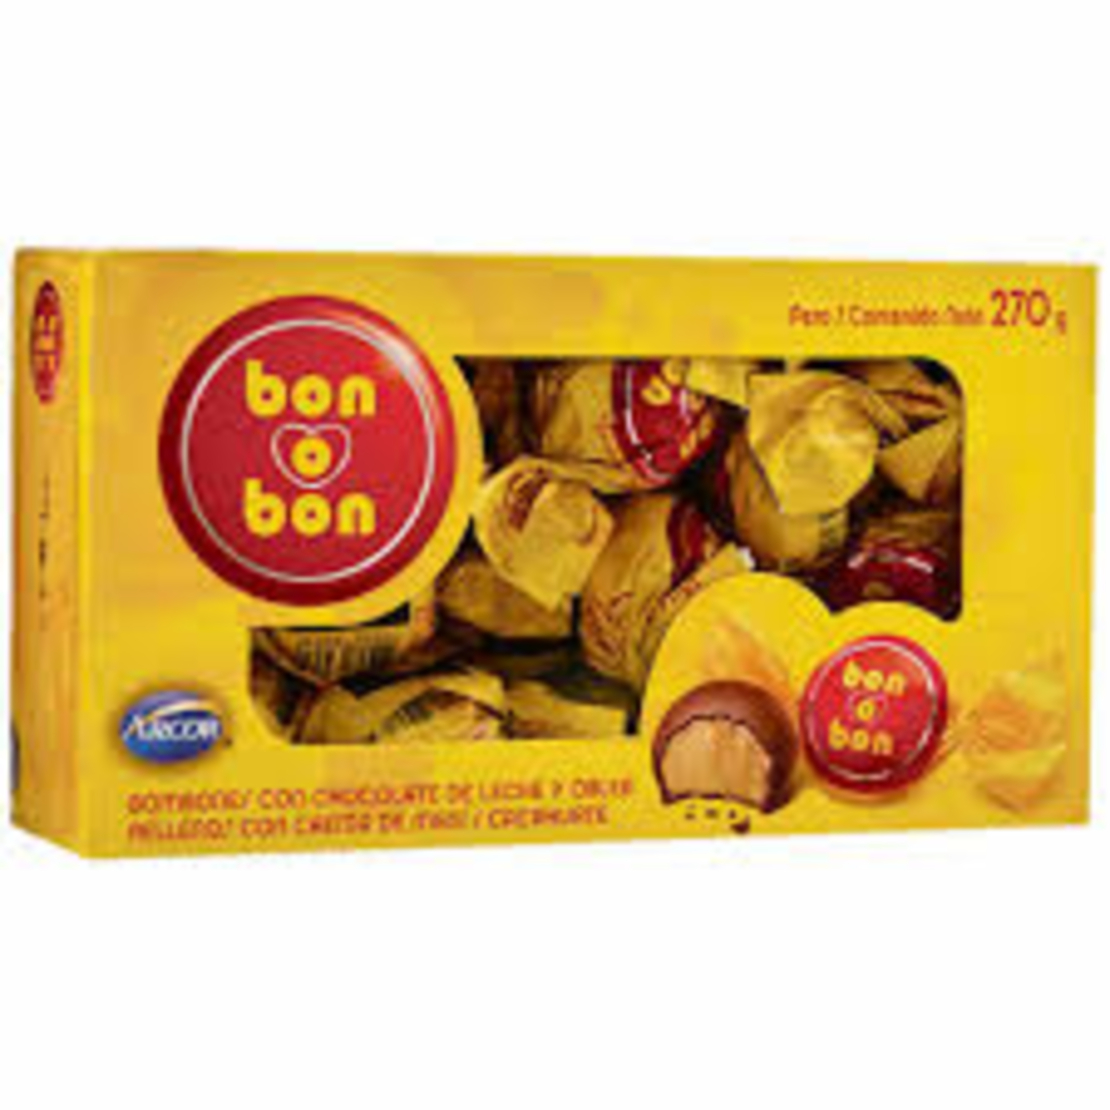 Bon o Bon - Peanut Cream & Wafer Filled Milk Chocolate Bonbons 270g